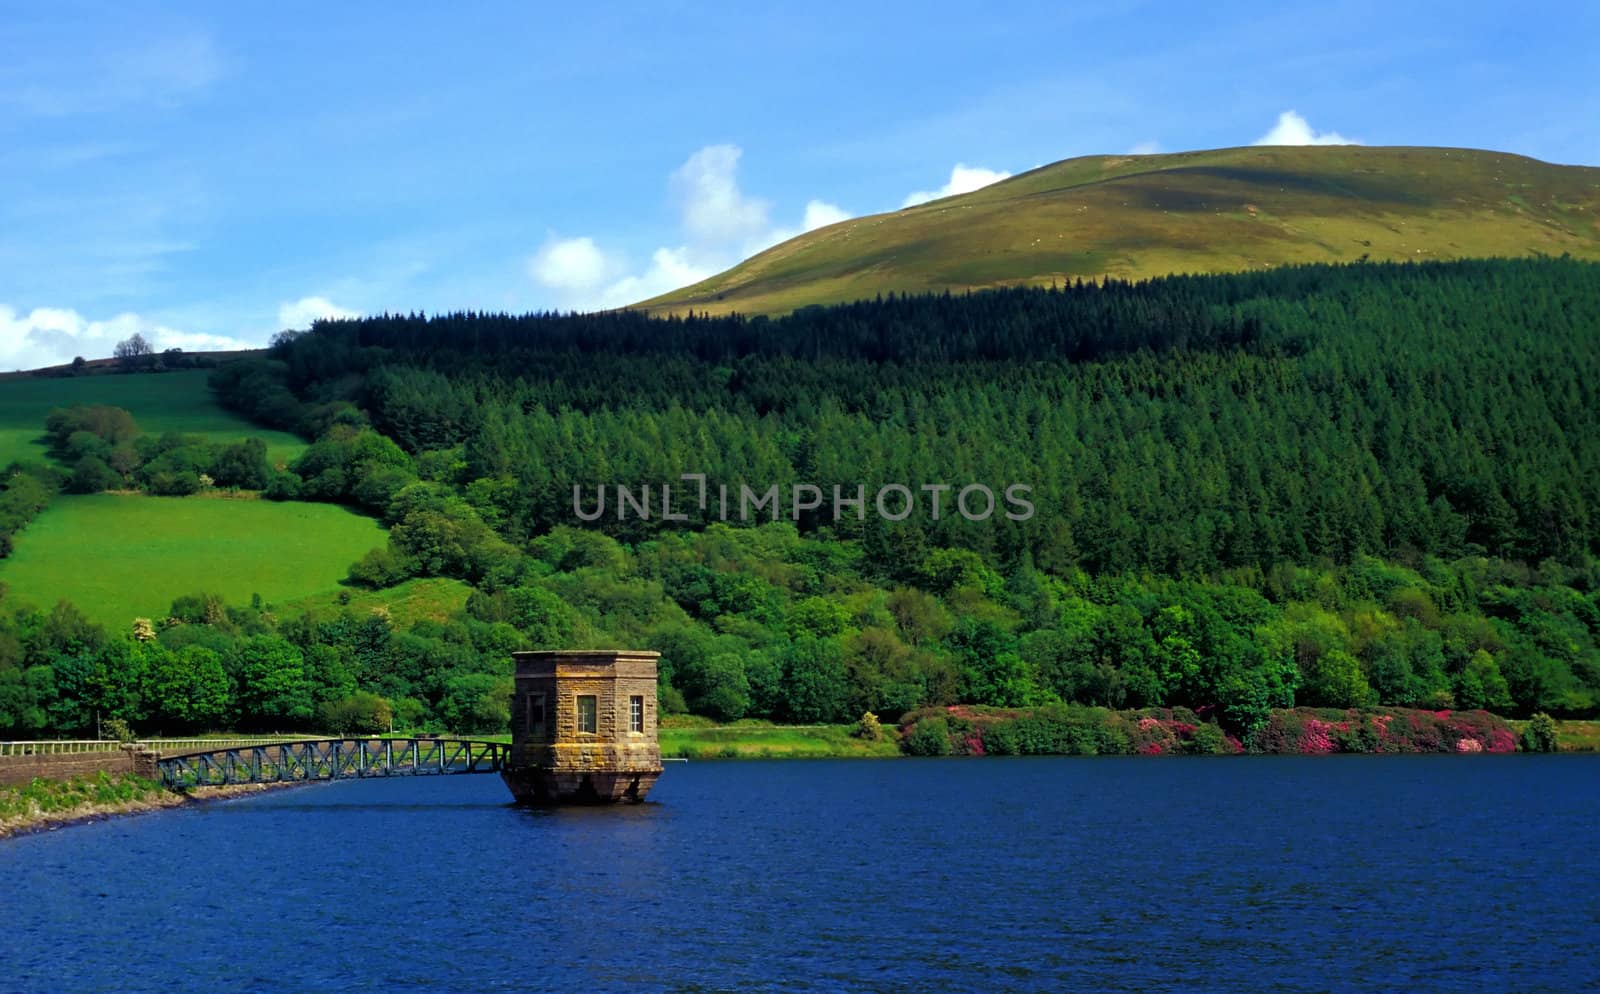 Talybont Reservoir, Wales in spring time.